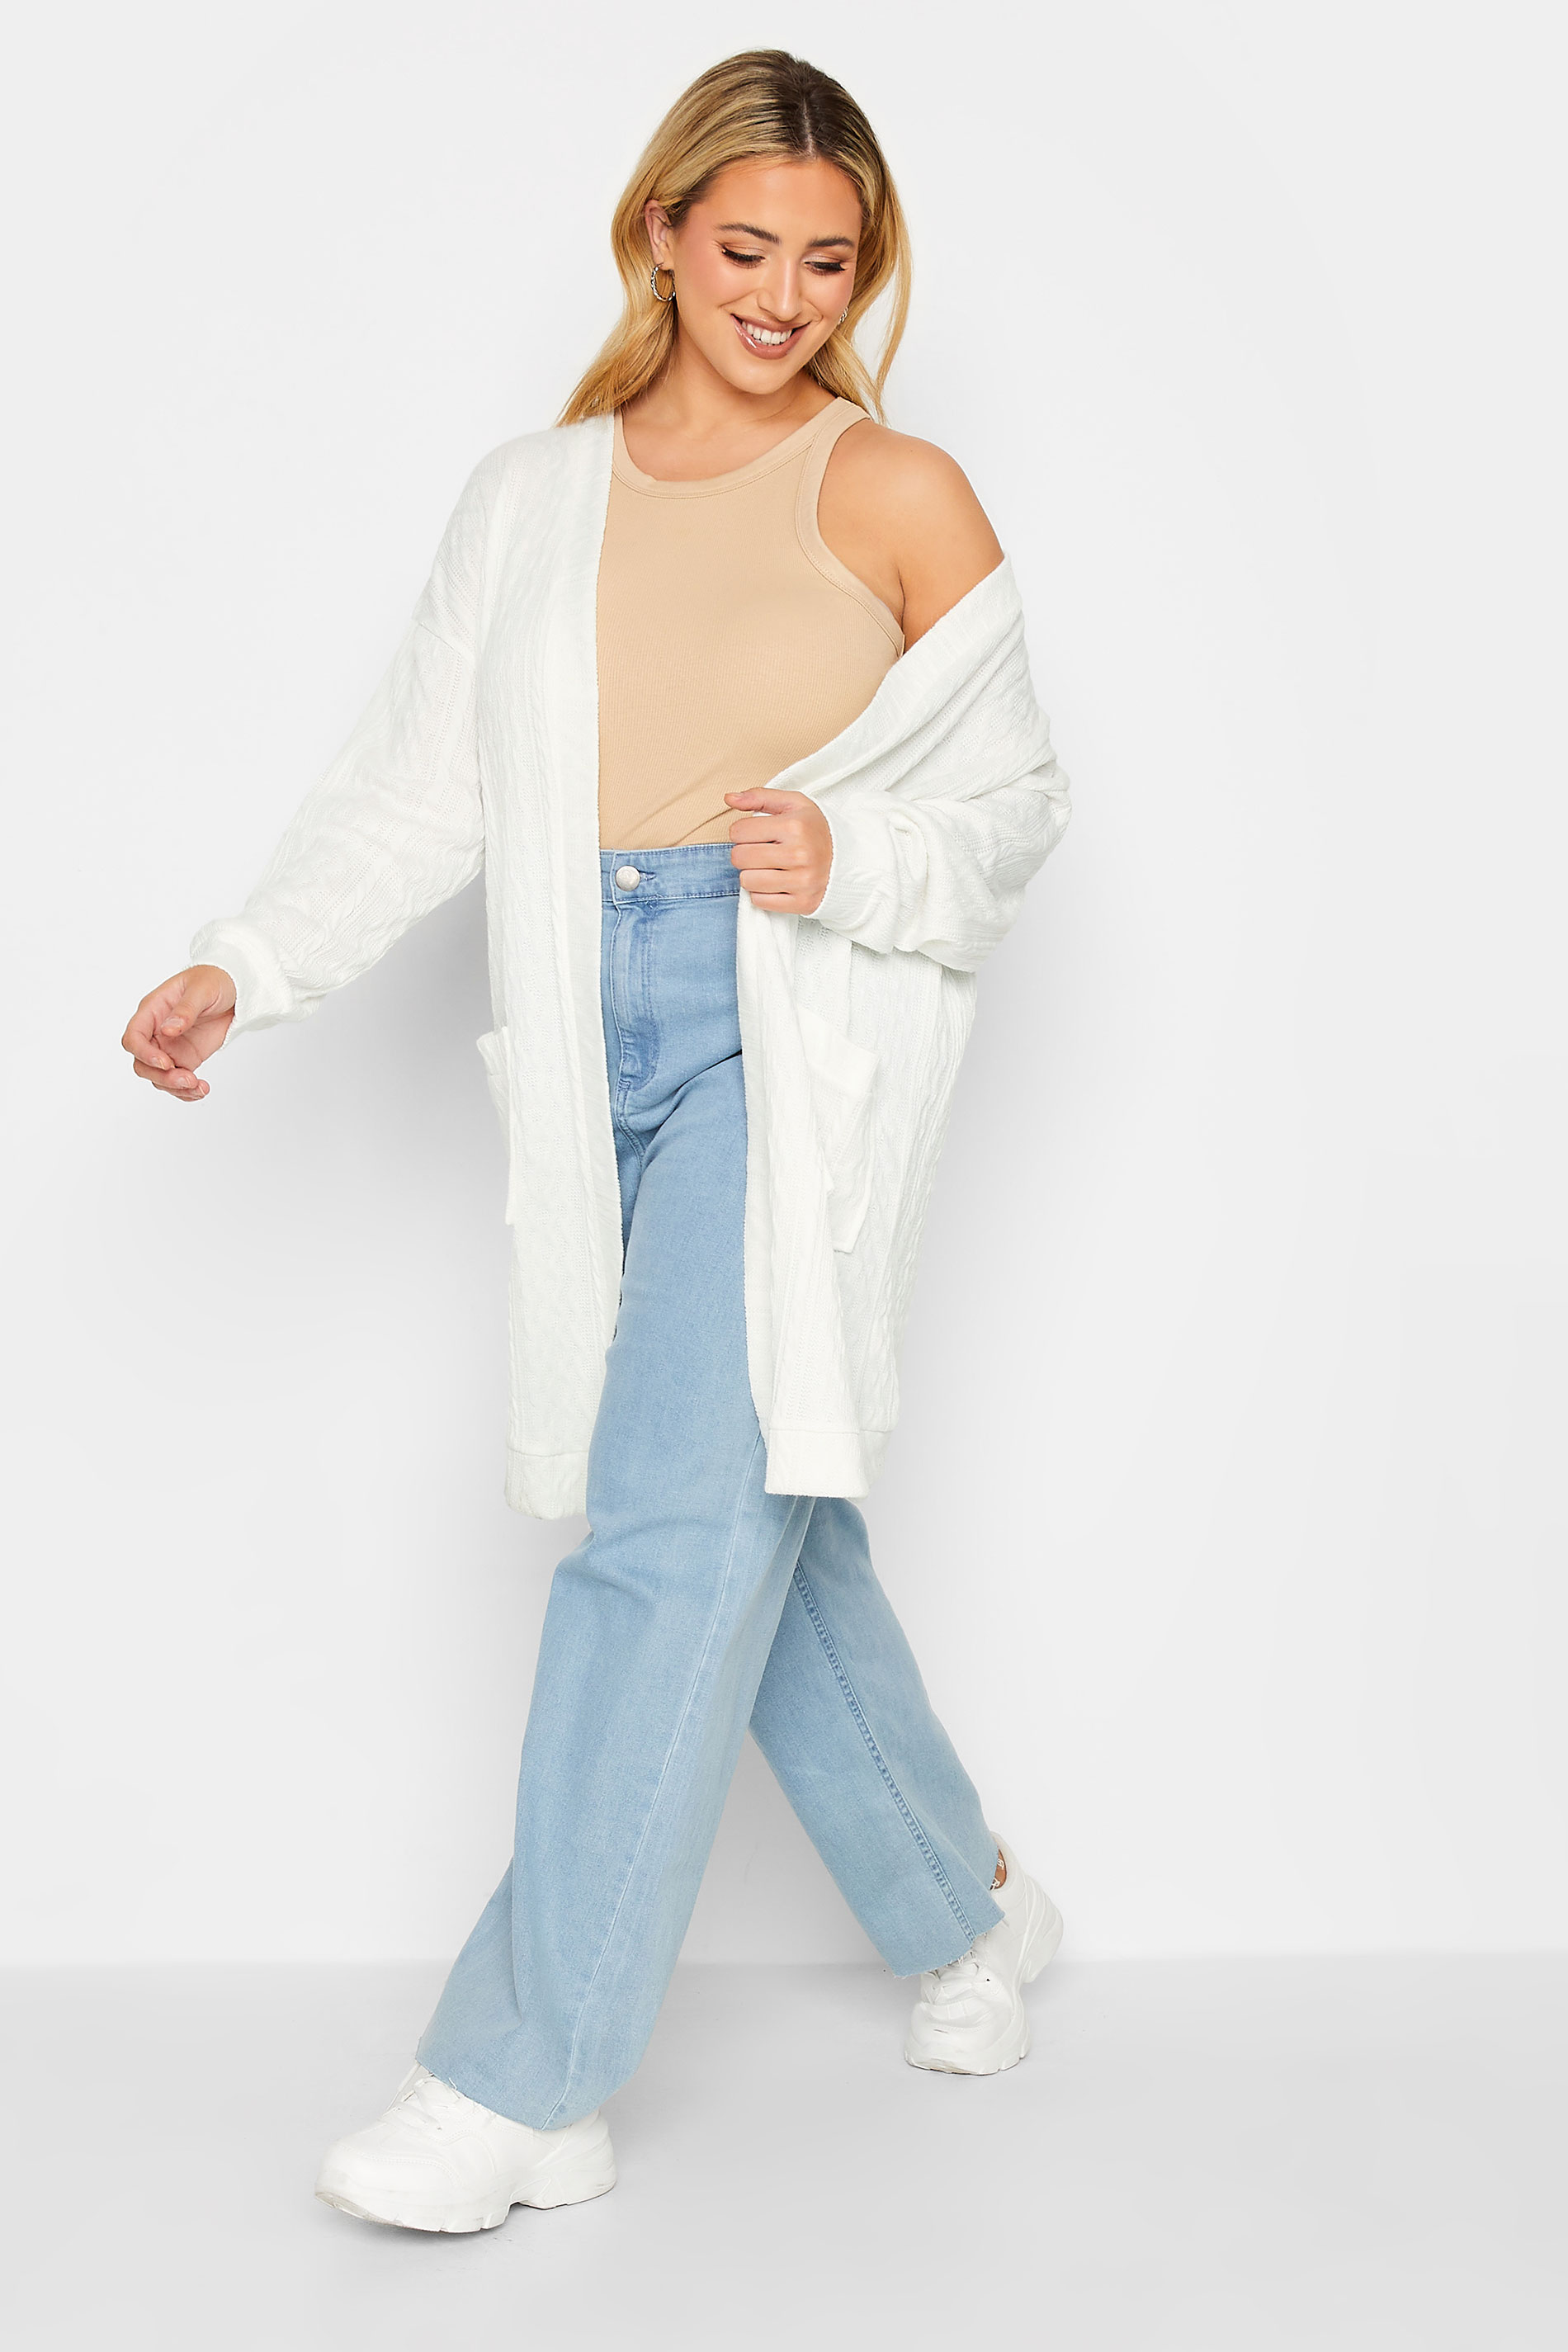 YOURS LUXURY Plus Size White Soft Knit Cardigan | Yours Clothing